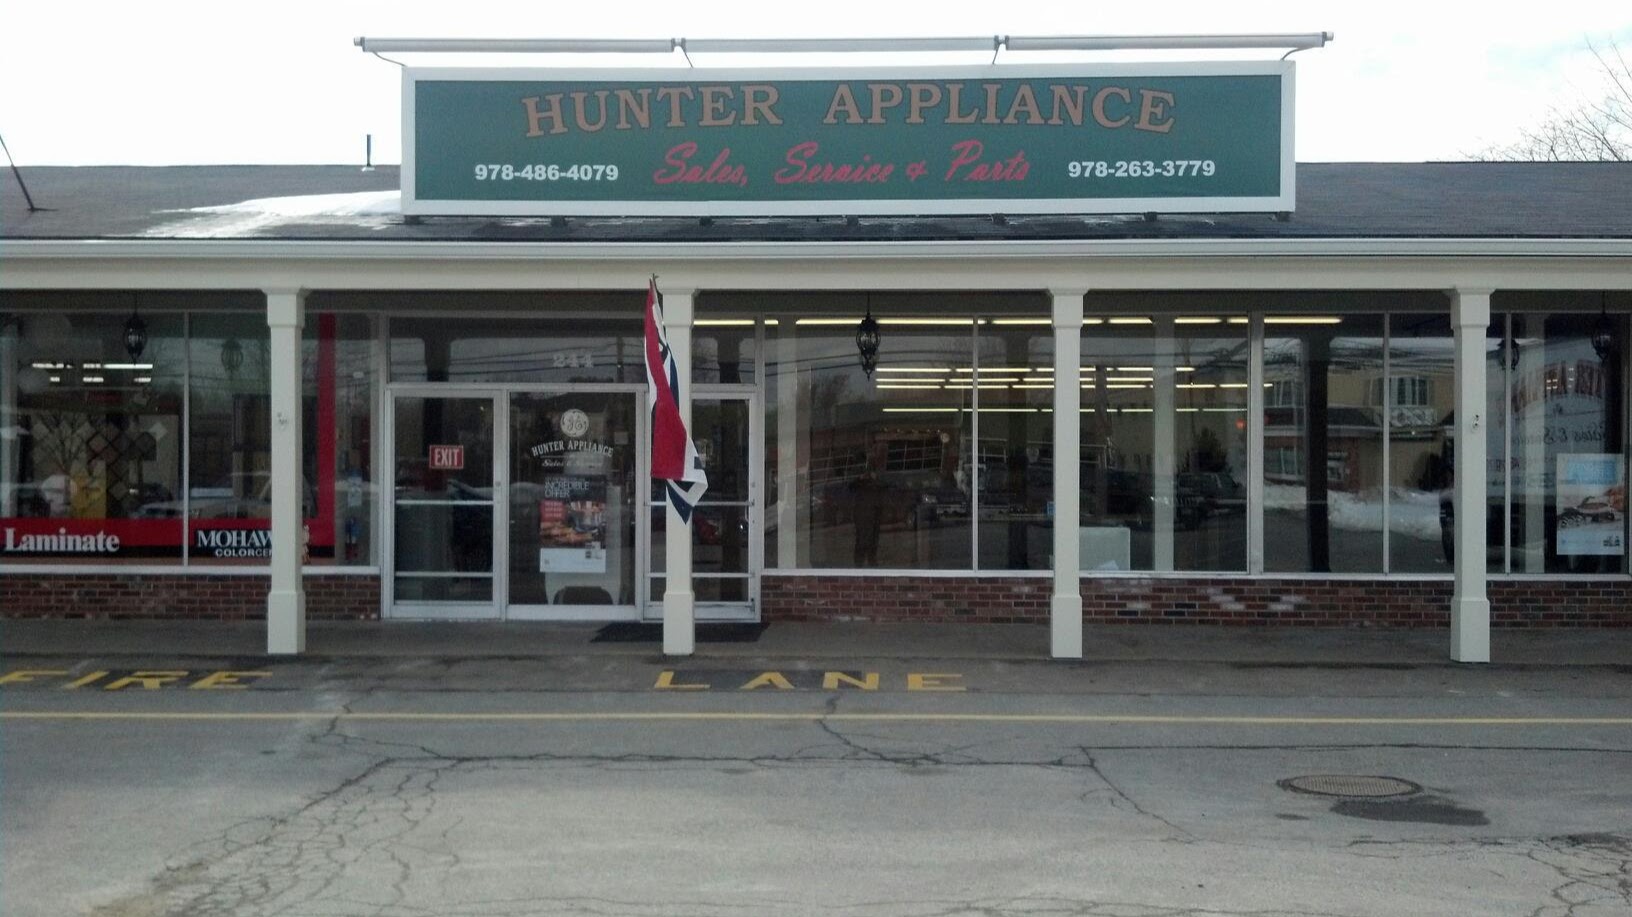 Hunter Appliance Sales, Service & Parts